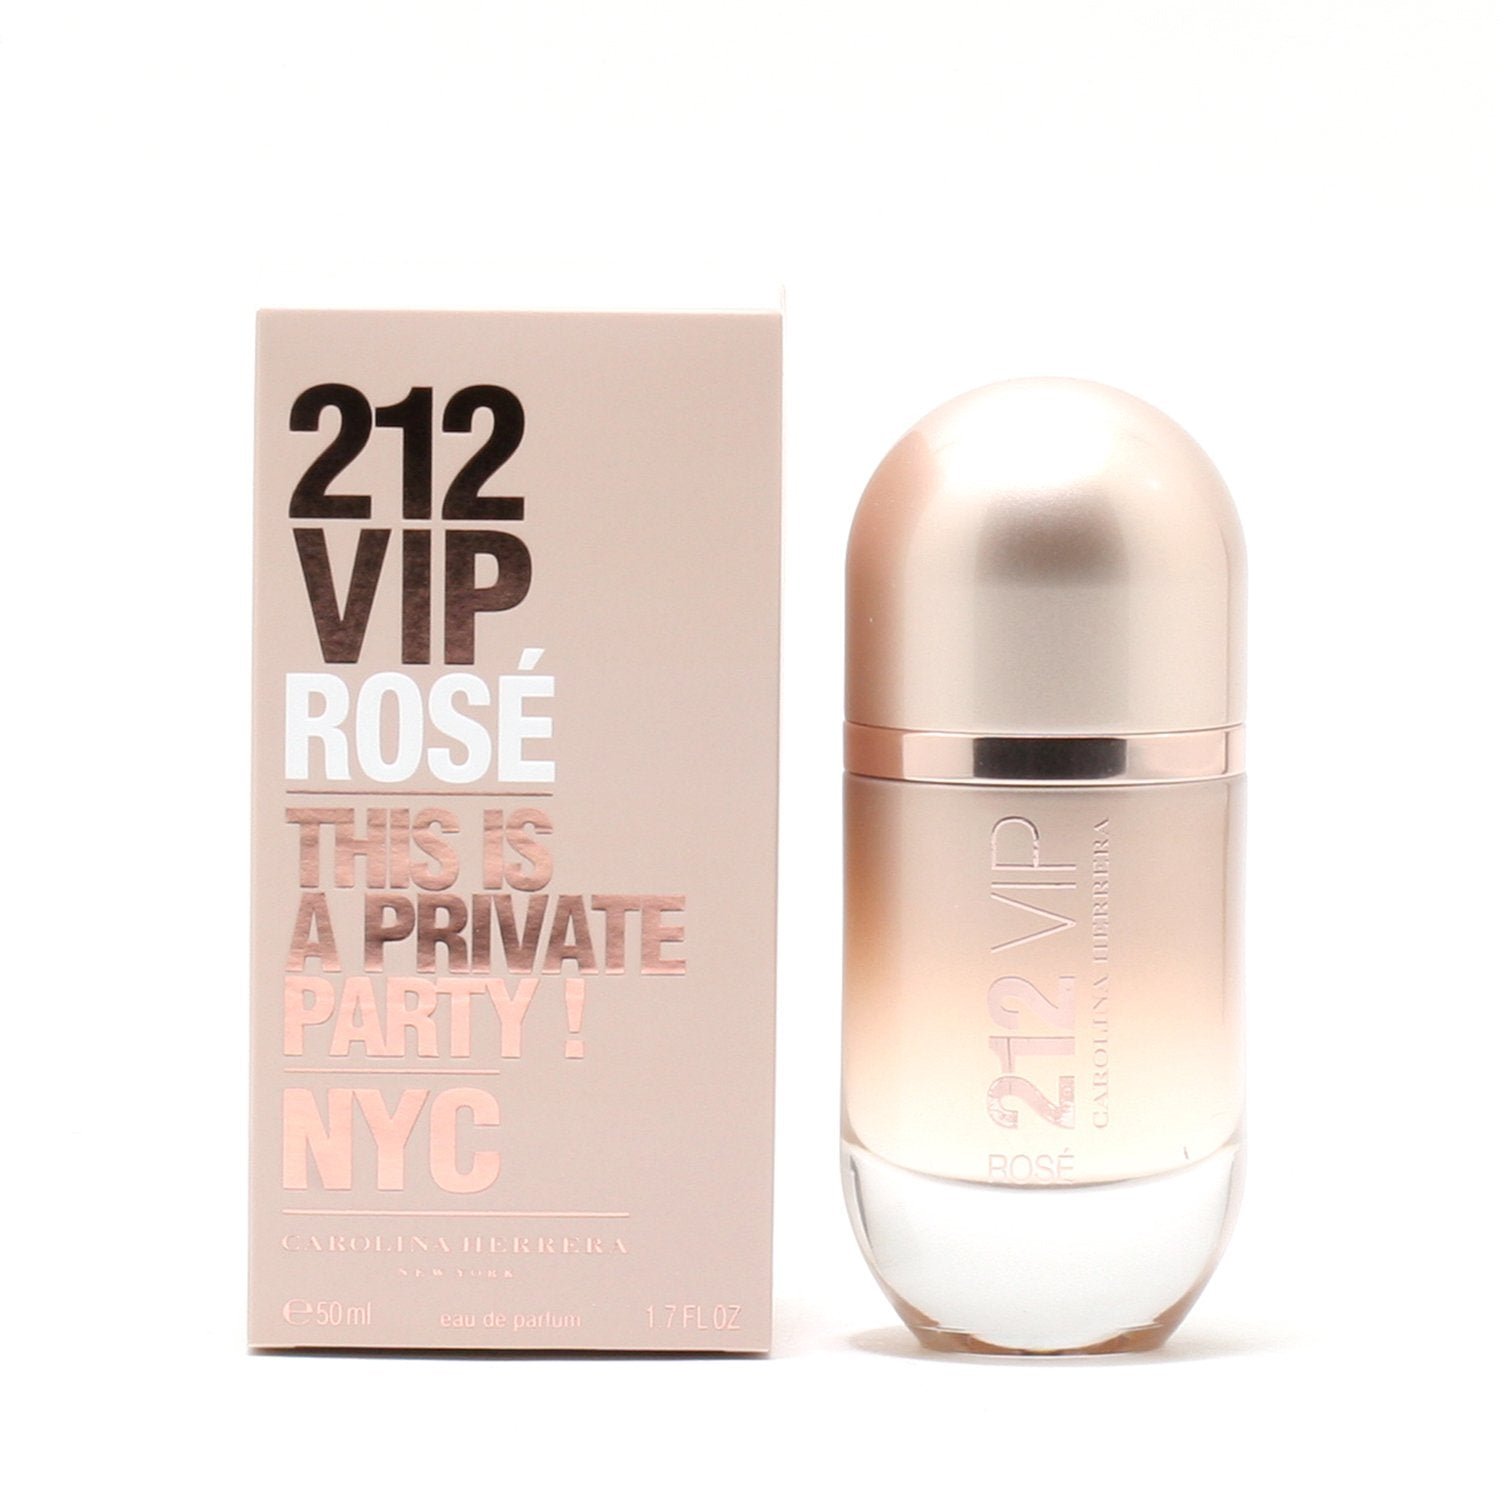 FOR BY SPRAY WOMEN VIP Fragrance DE PARFUM Room CAROLINA – - ROSE 212 HERRERA EAU